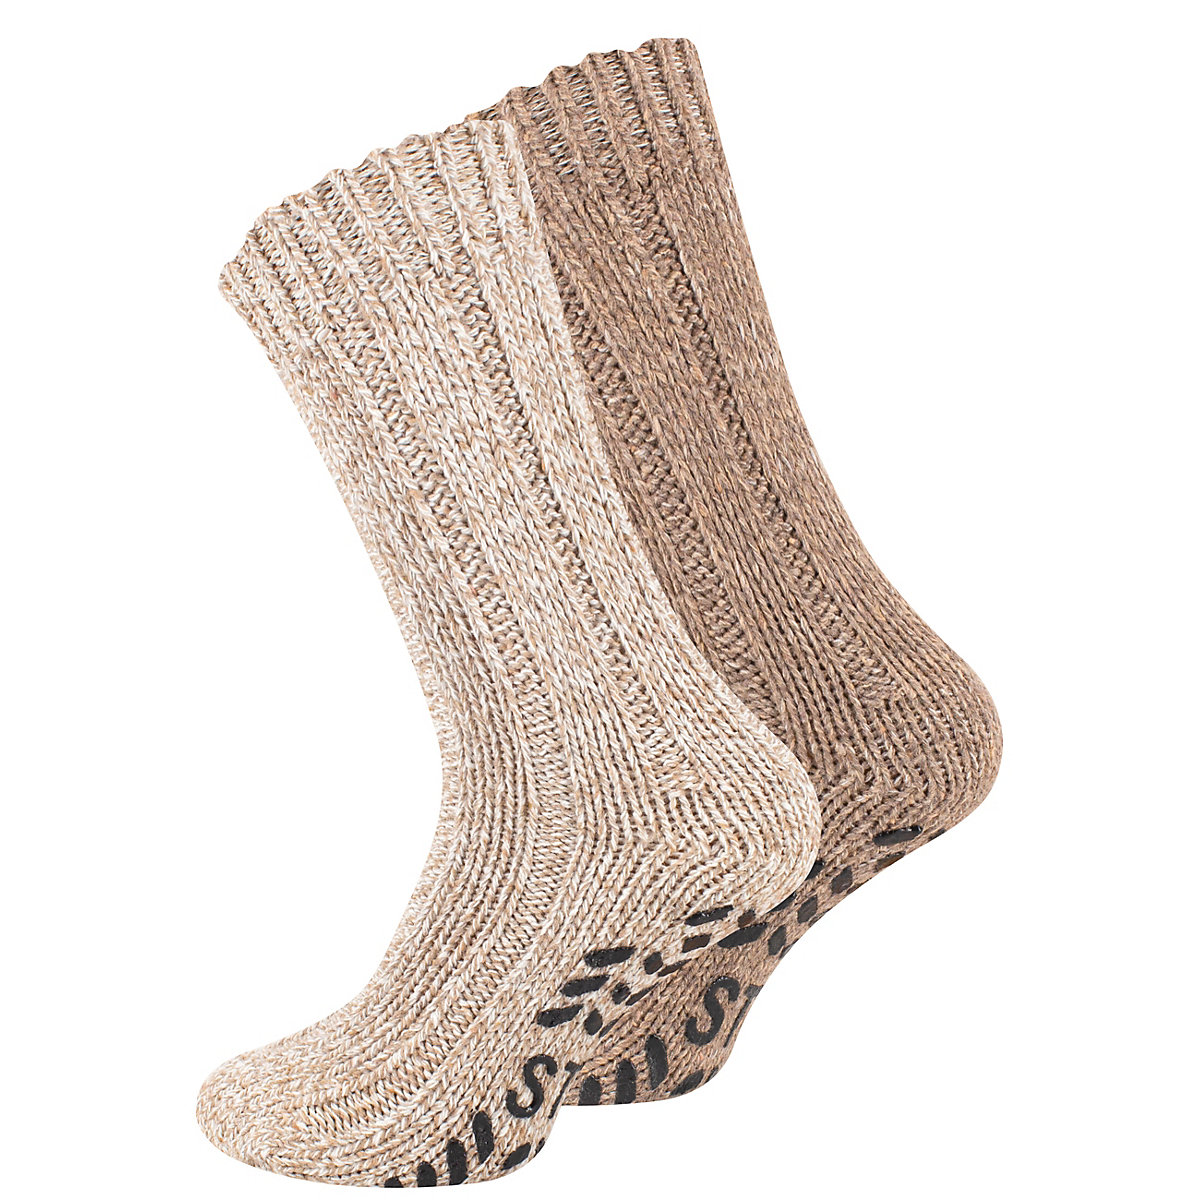 Cotton Prime 2 Paar Norweger Woll-Strick-Socken Socken braun/beige